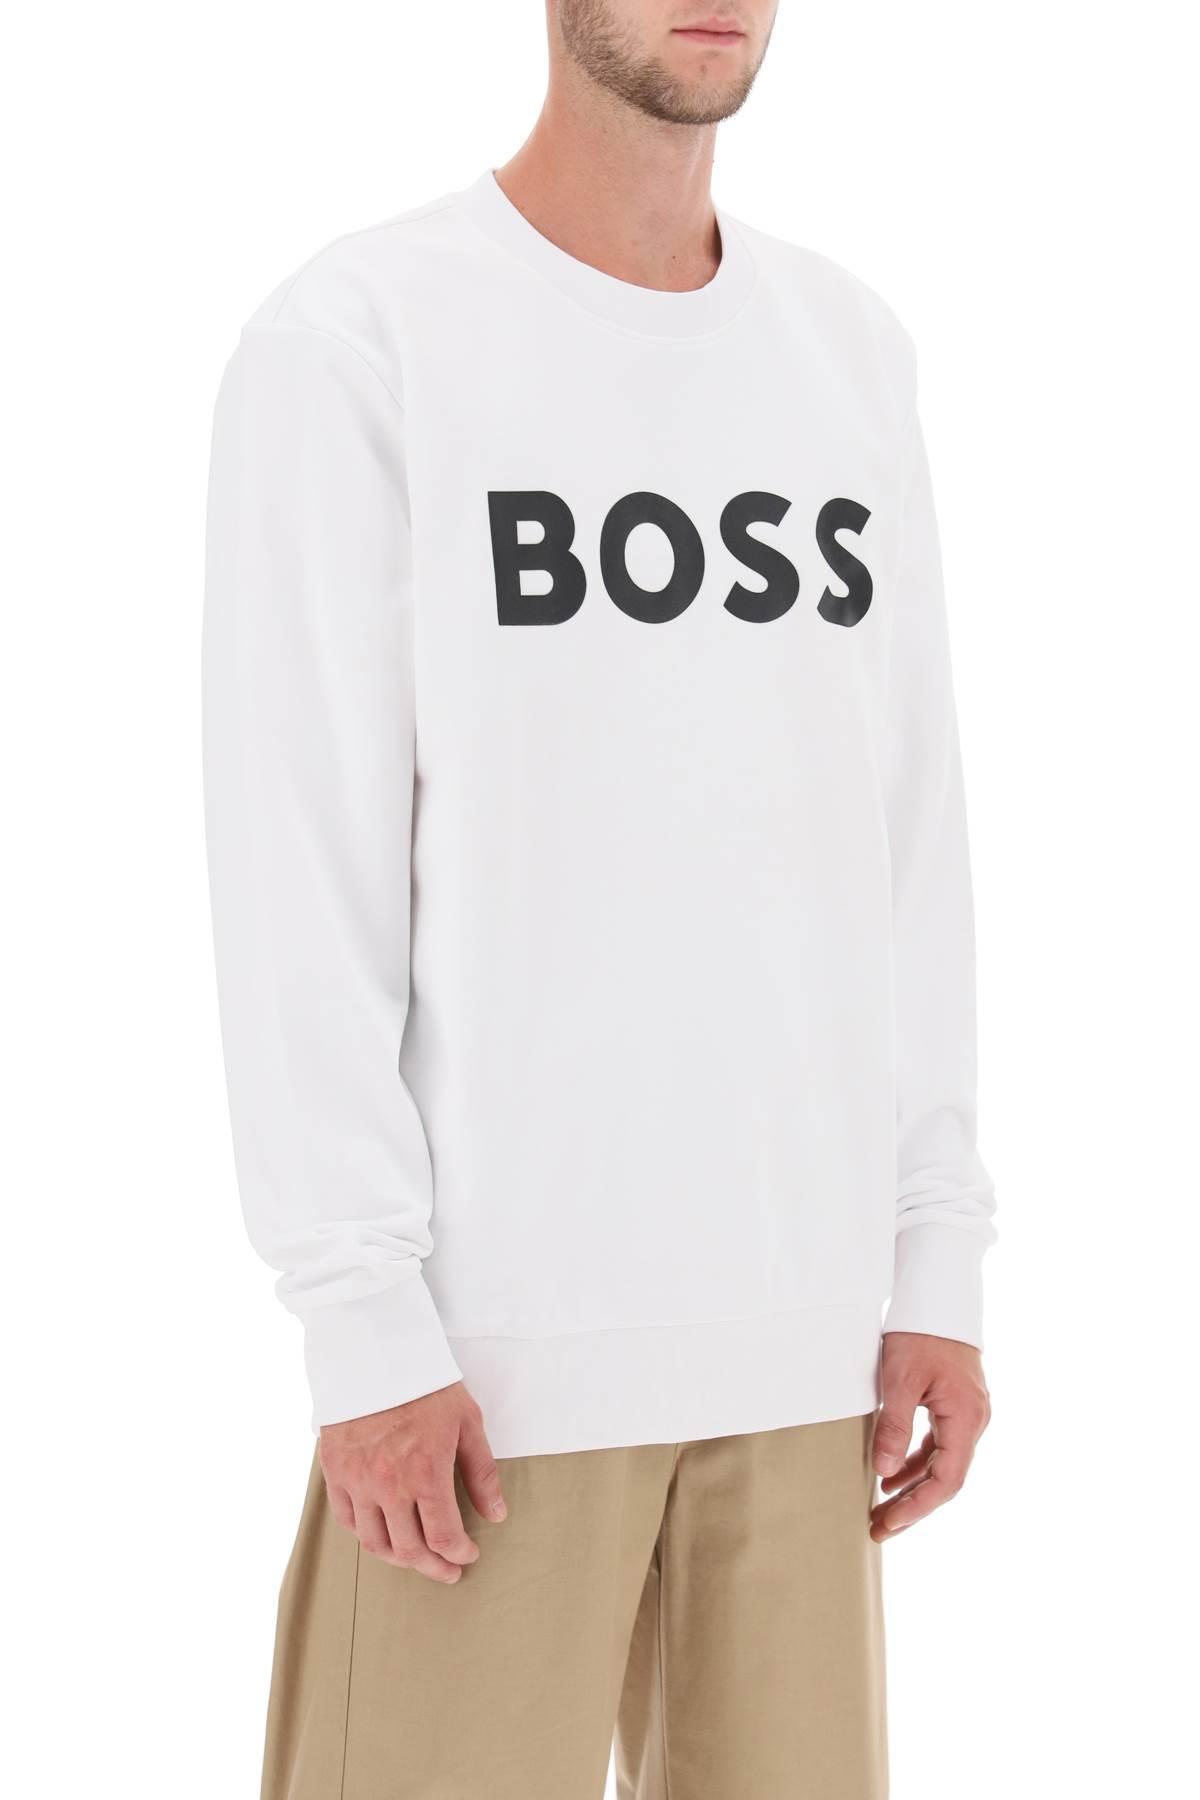 BOSS by HUGO BOSS Logo Print Sweatshirt in White for Men | Lyst